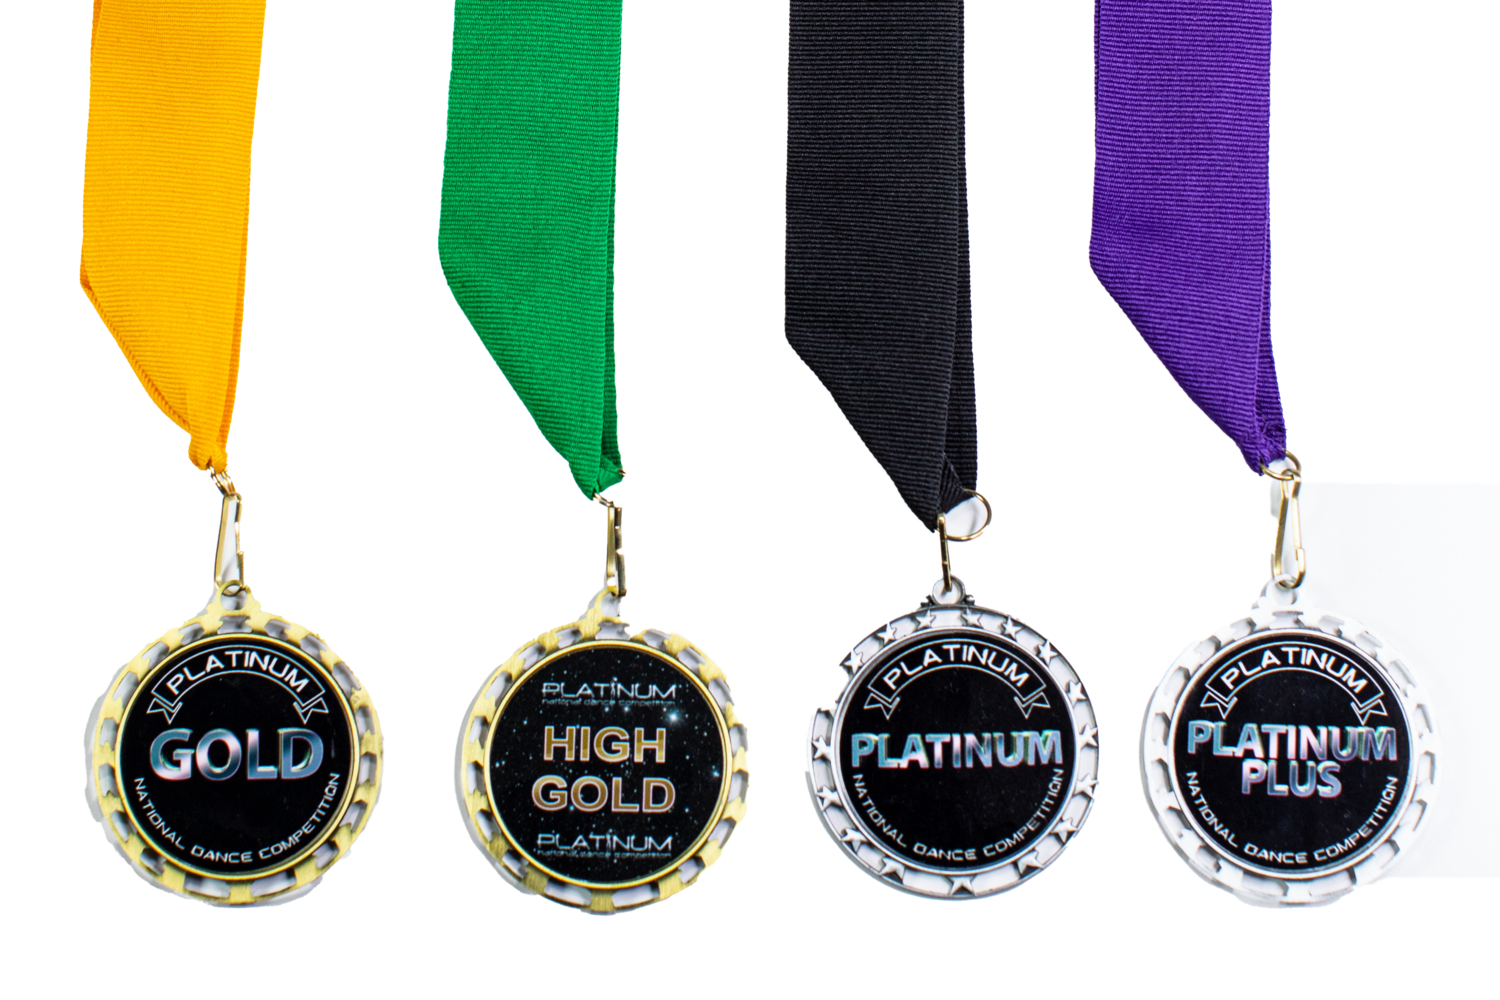 Regional Medals